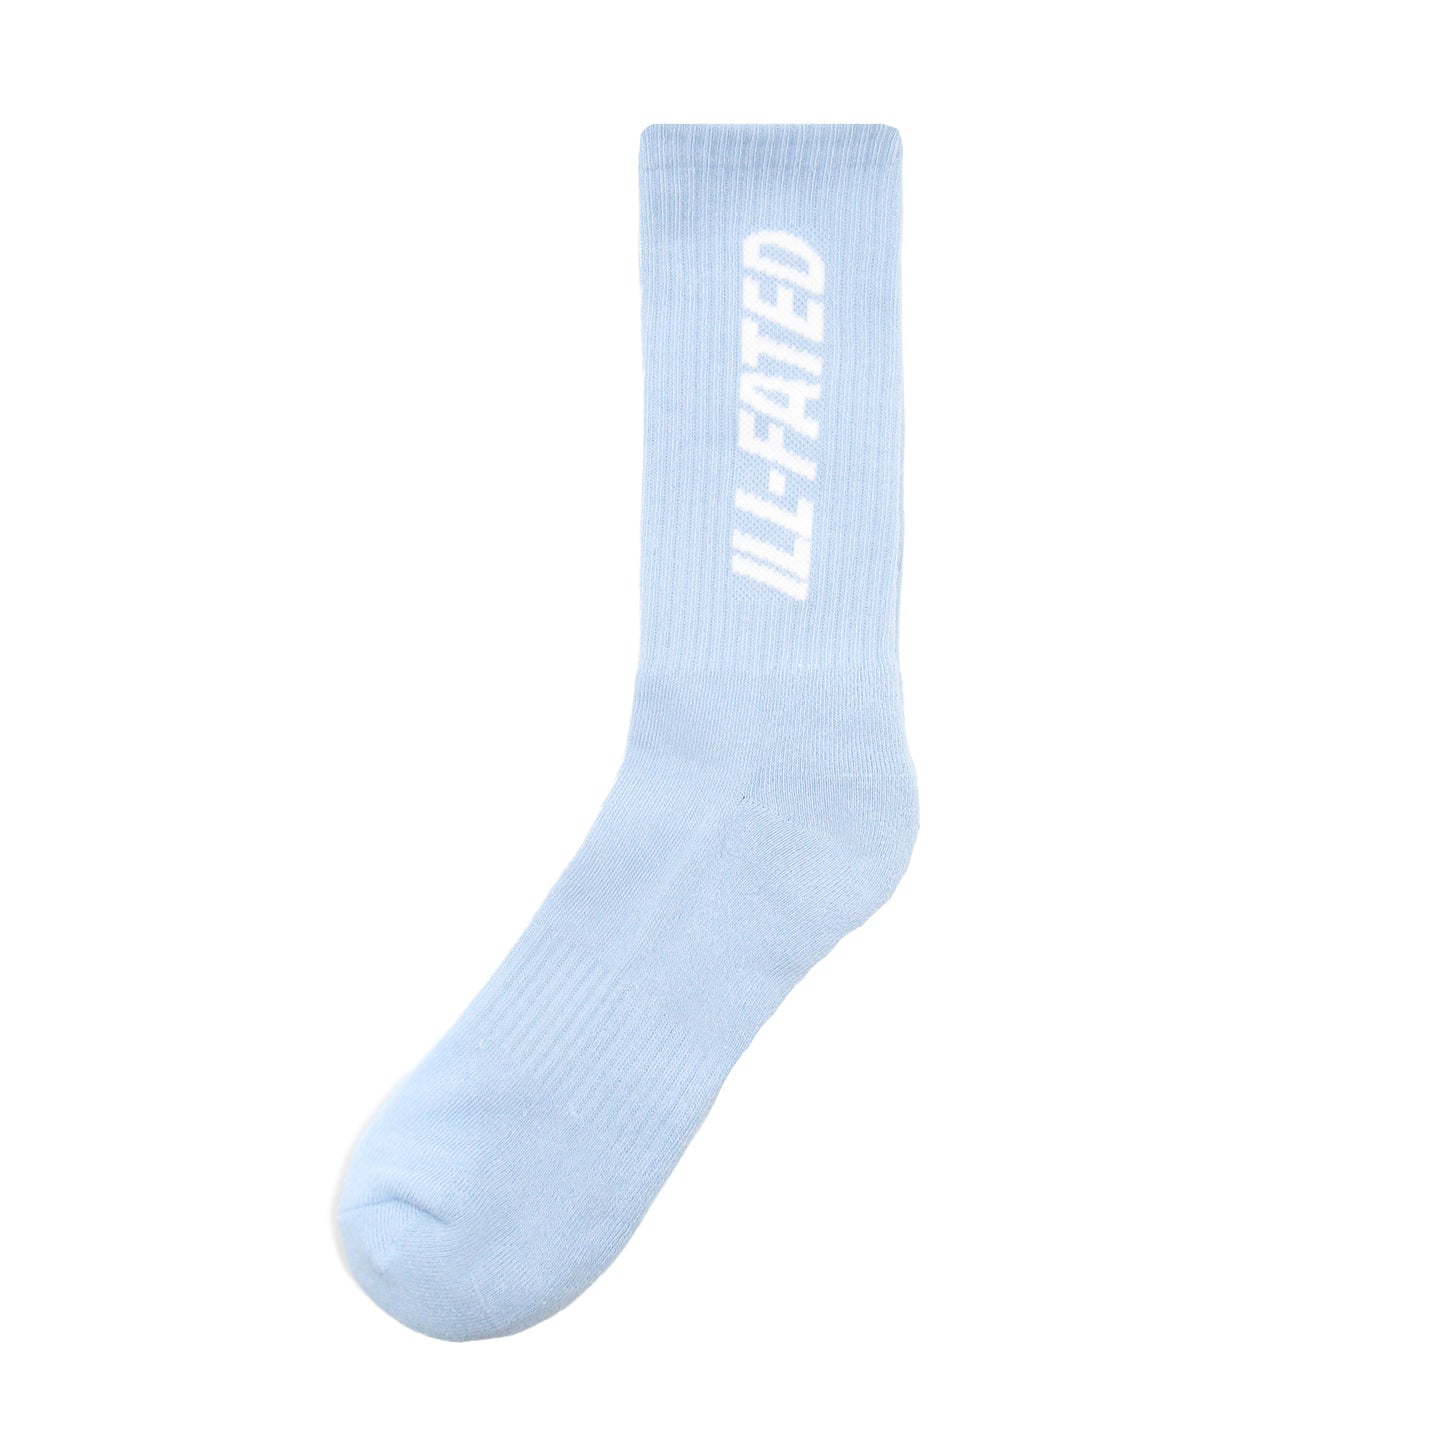 Staple Socks - Slate